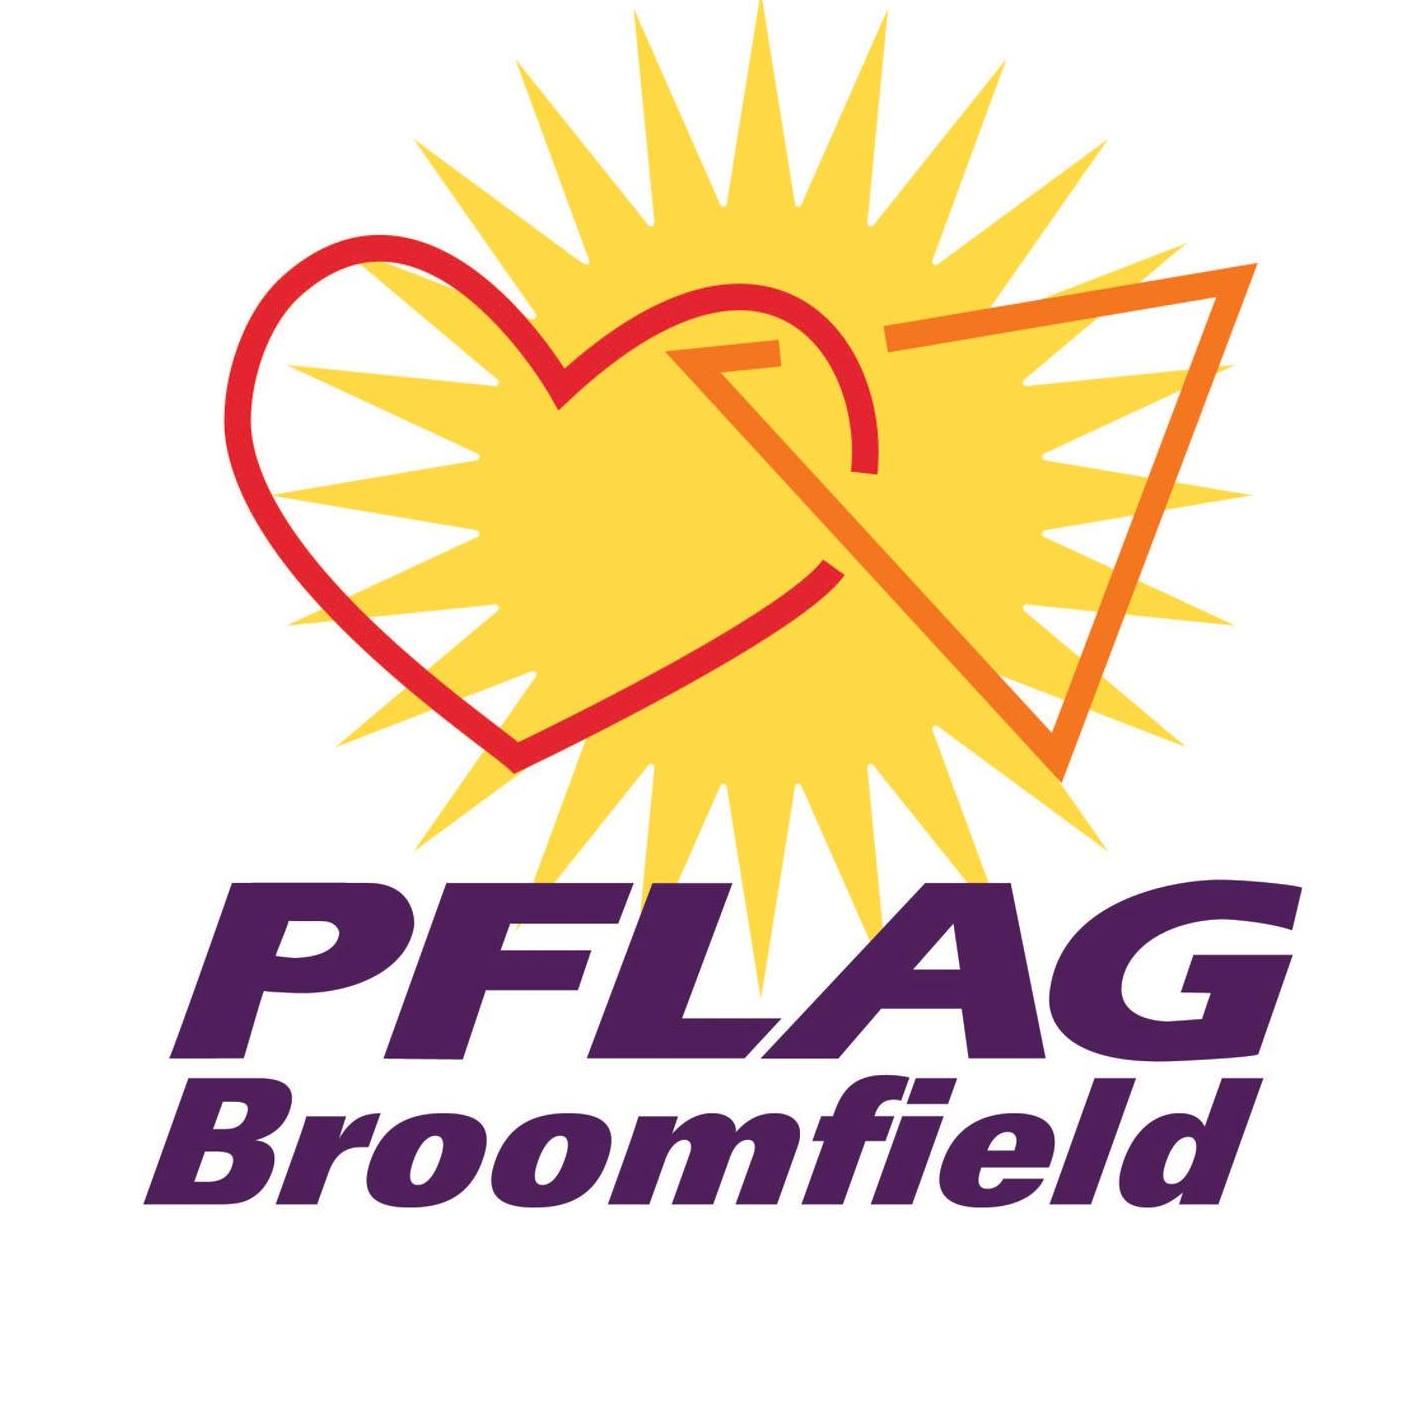 LGBTQ Organizations in Denver Colorado - PFLAG Broomfield